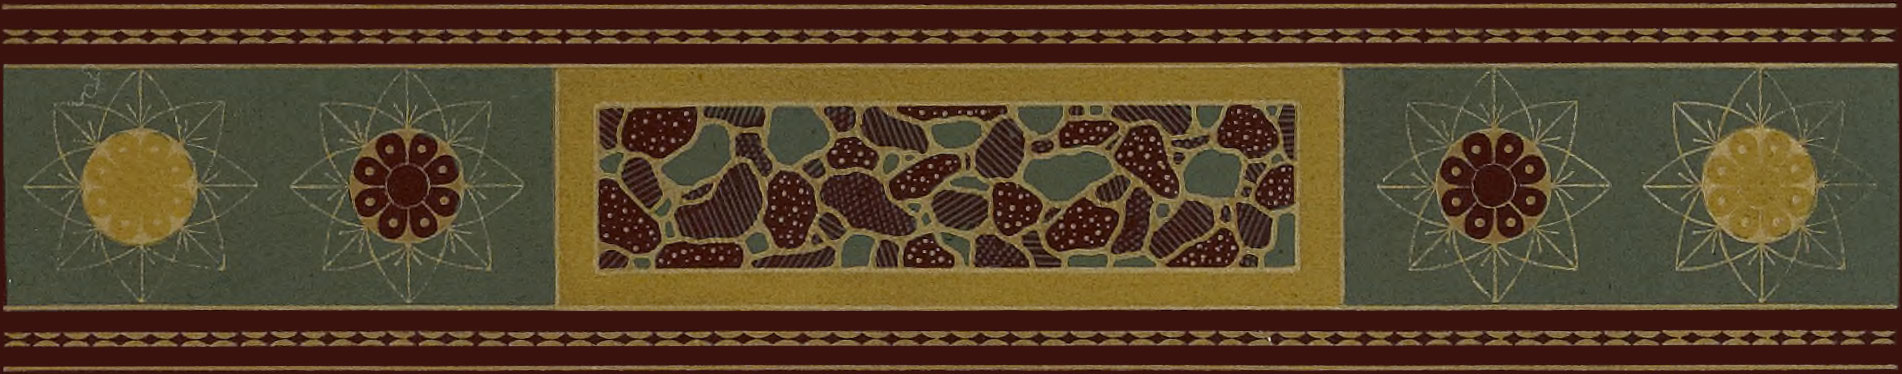 Ornate border comprising green, orange, and gold colors